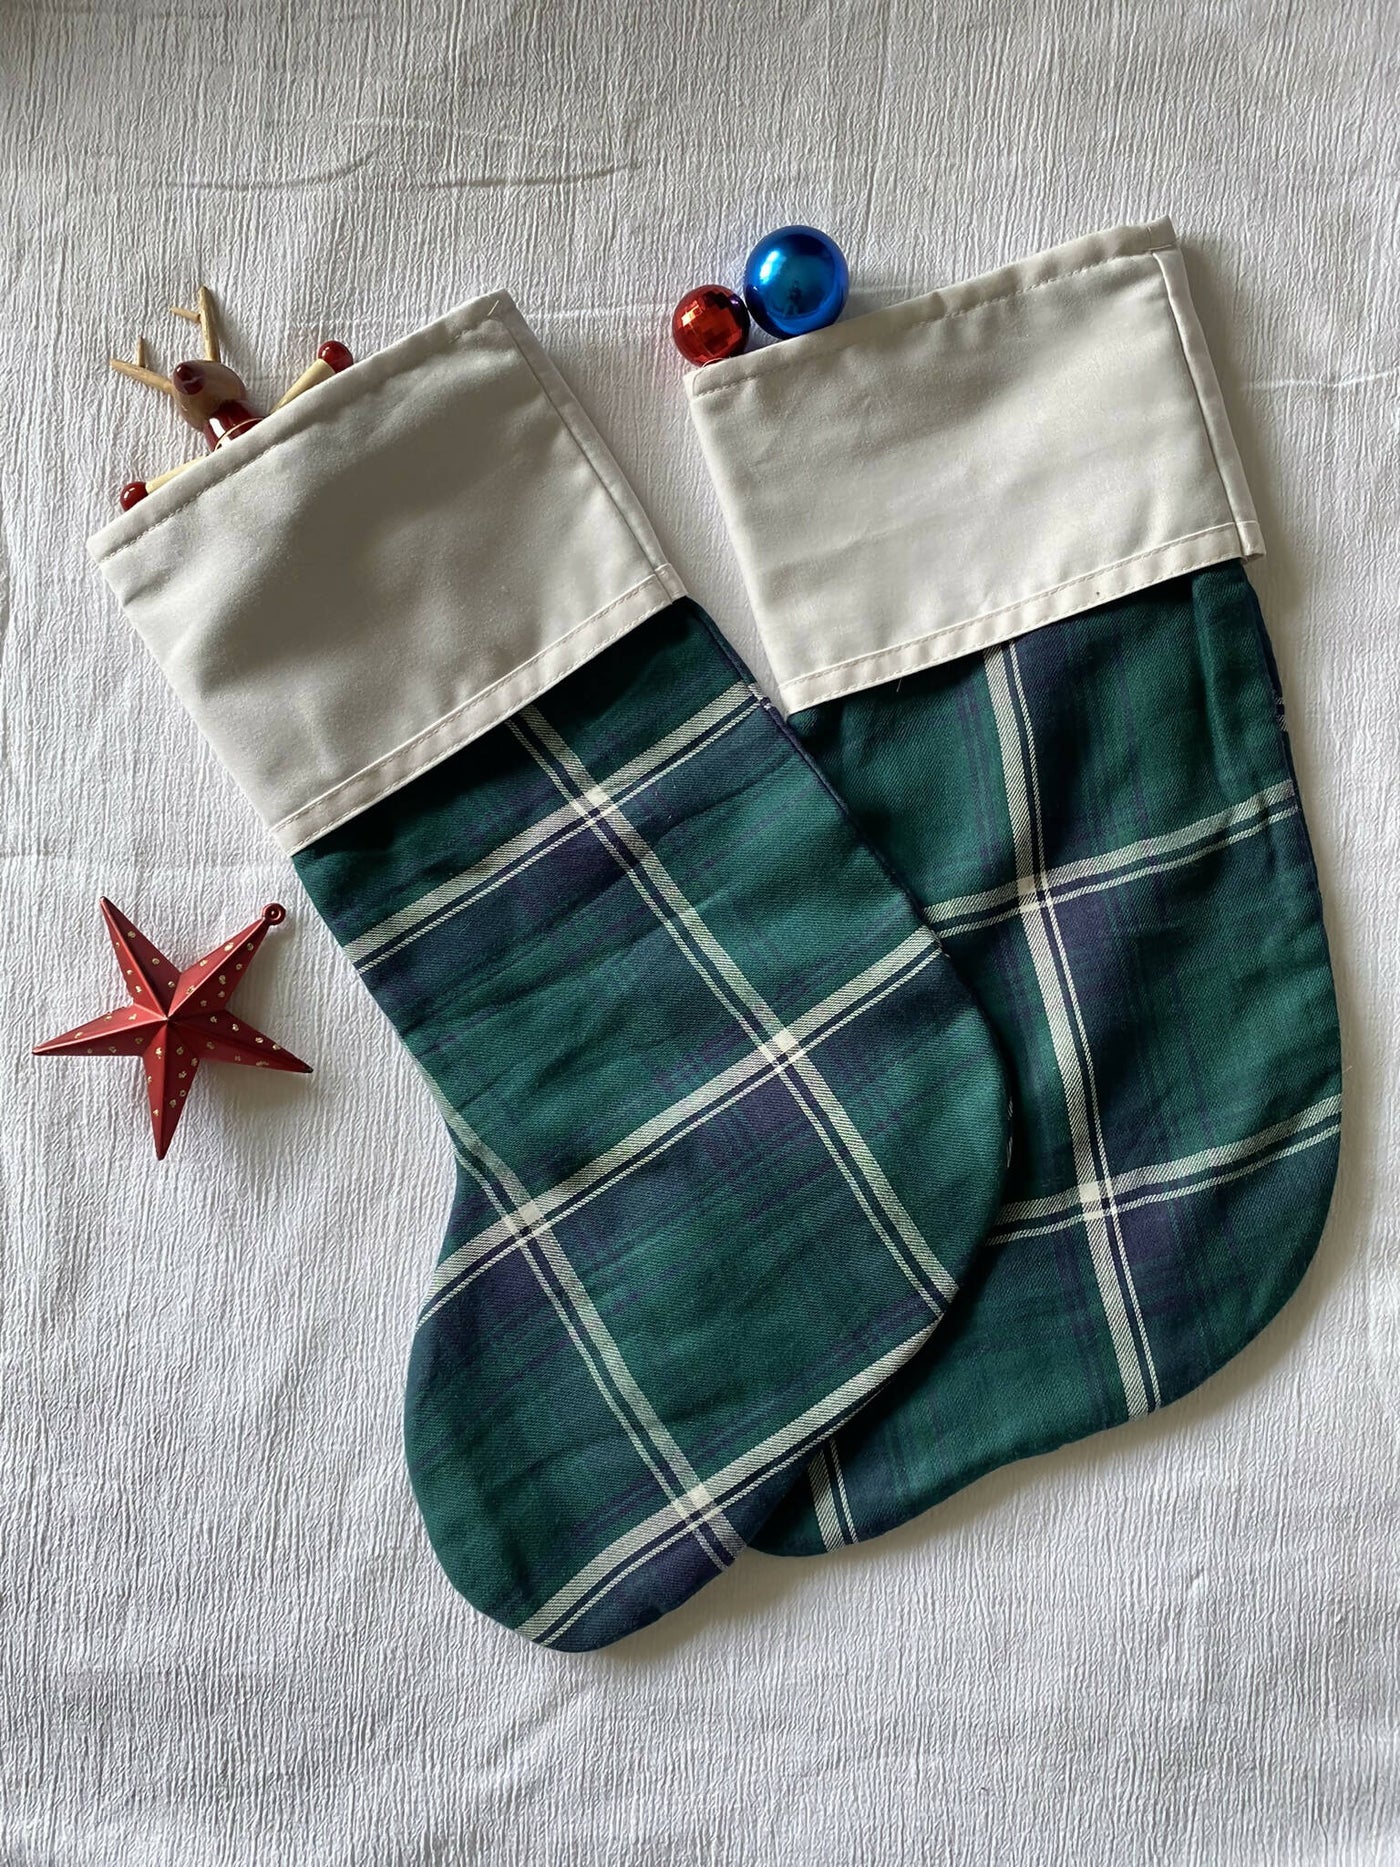 Christmas Stockings - Large